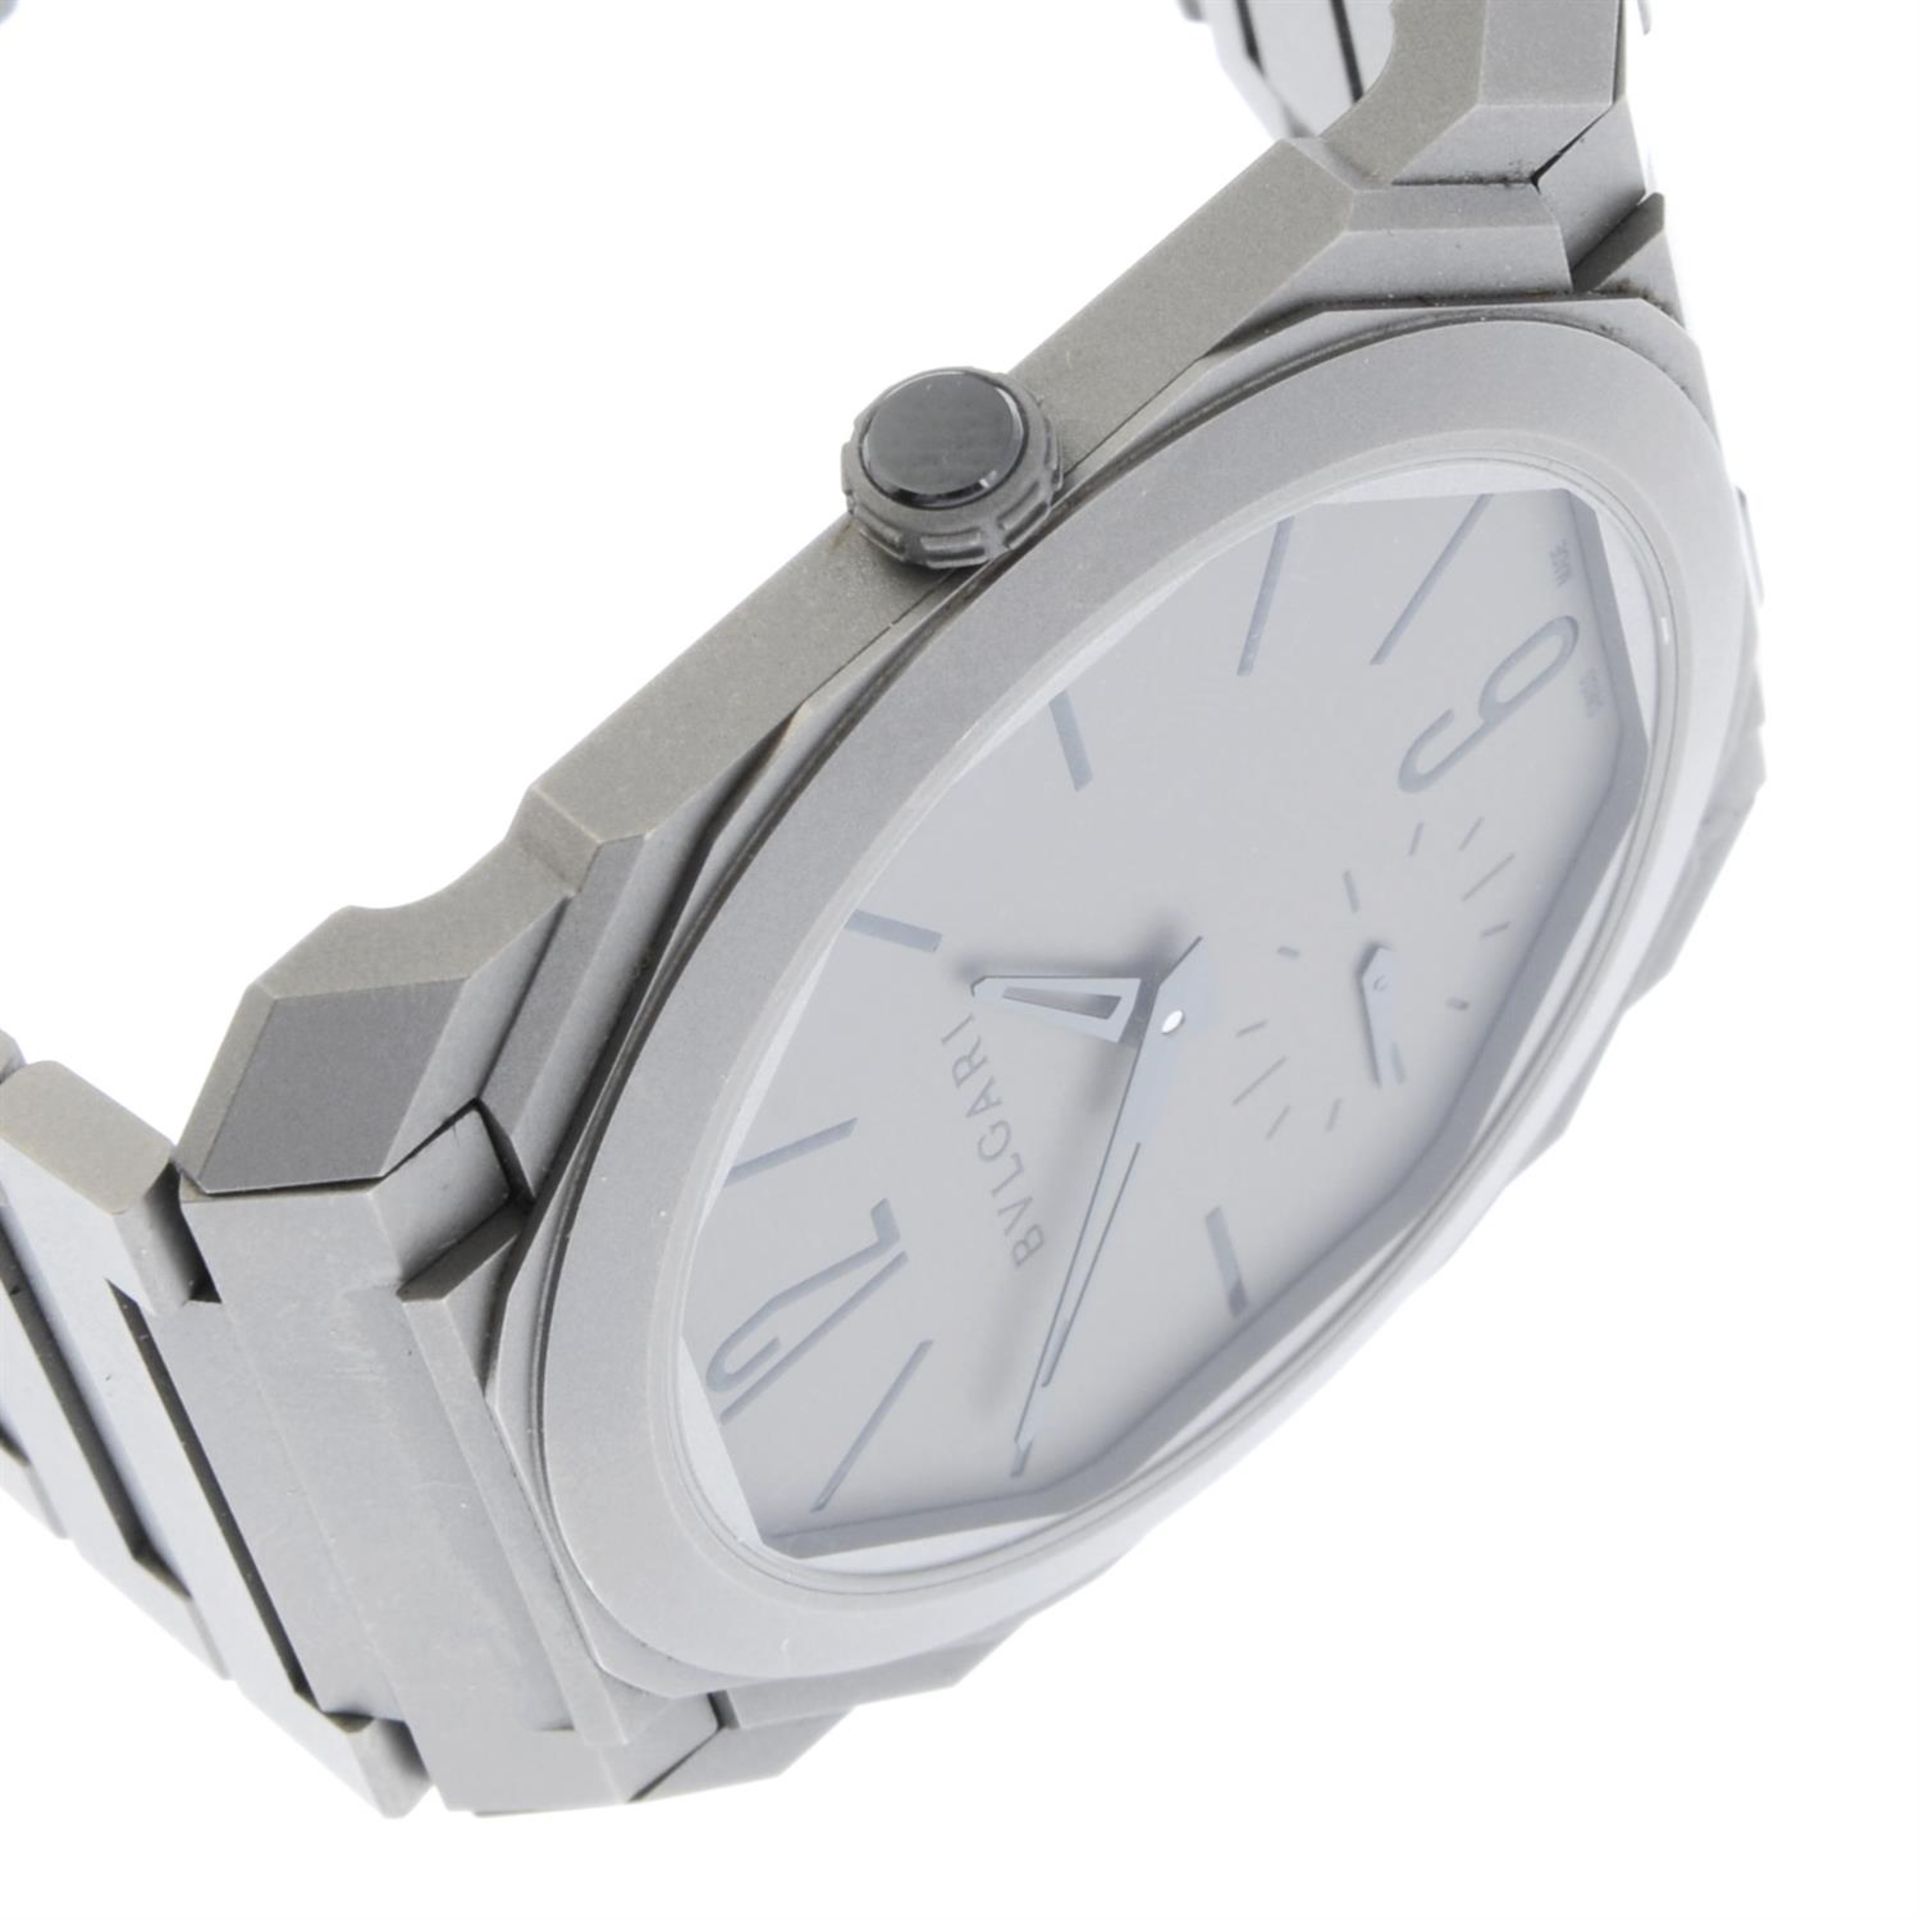 BULGARI - a titanium Octo Finissimo bracelet watch, 40mm. - Image 3 of 6